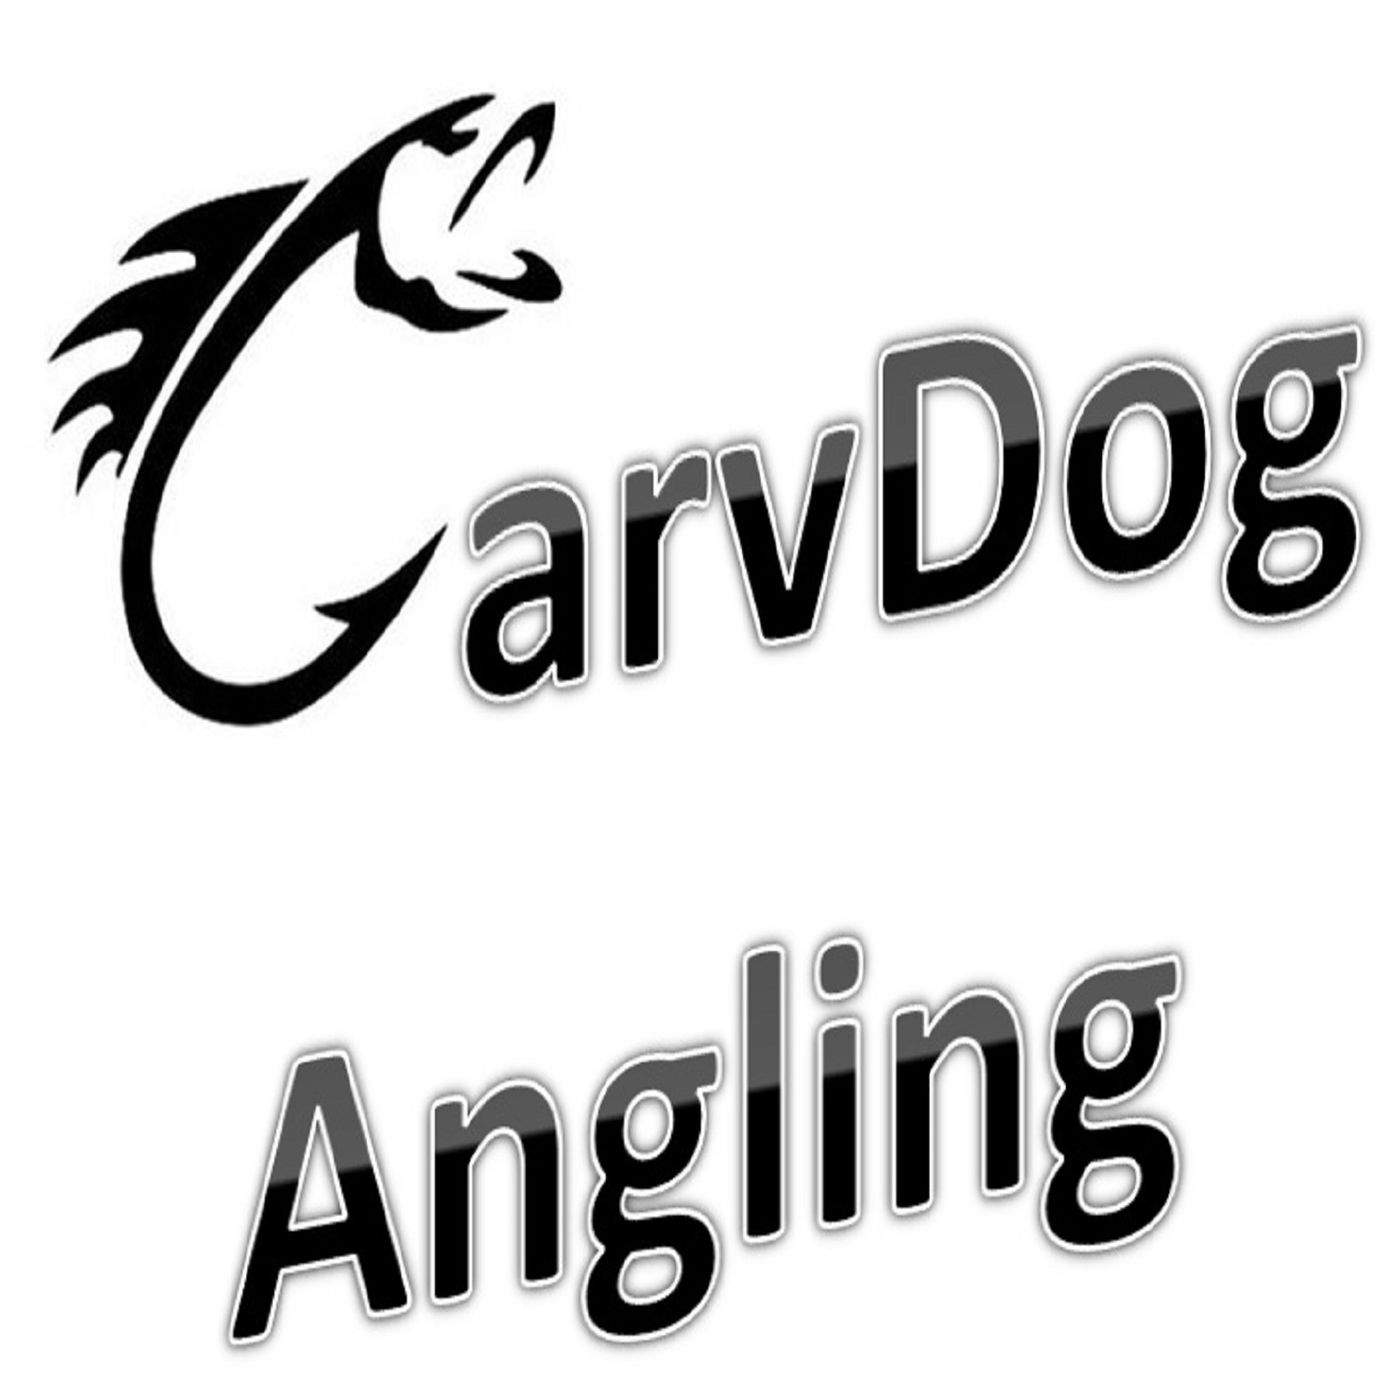 CarvDog Angling Podcast